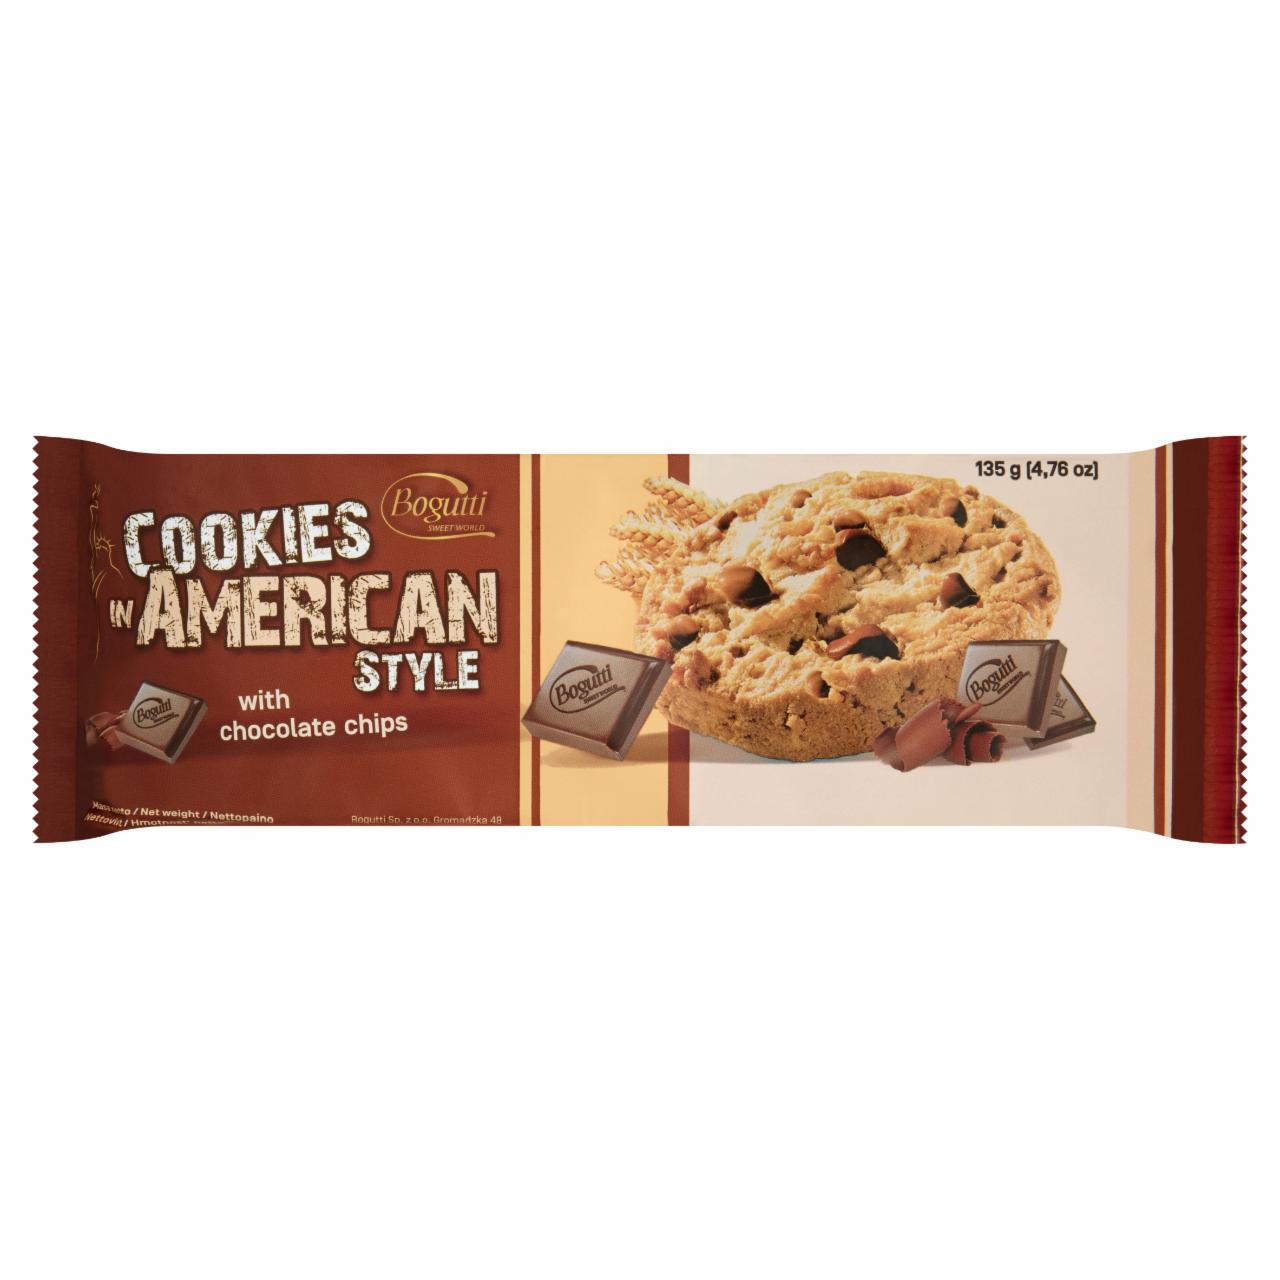 Képek - Cookies in american style ropogós keksz csokoládéval